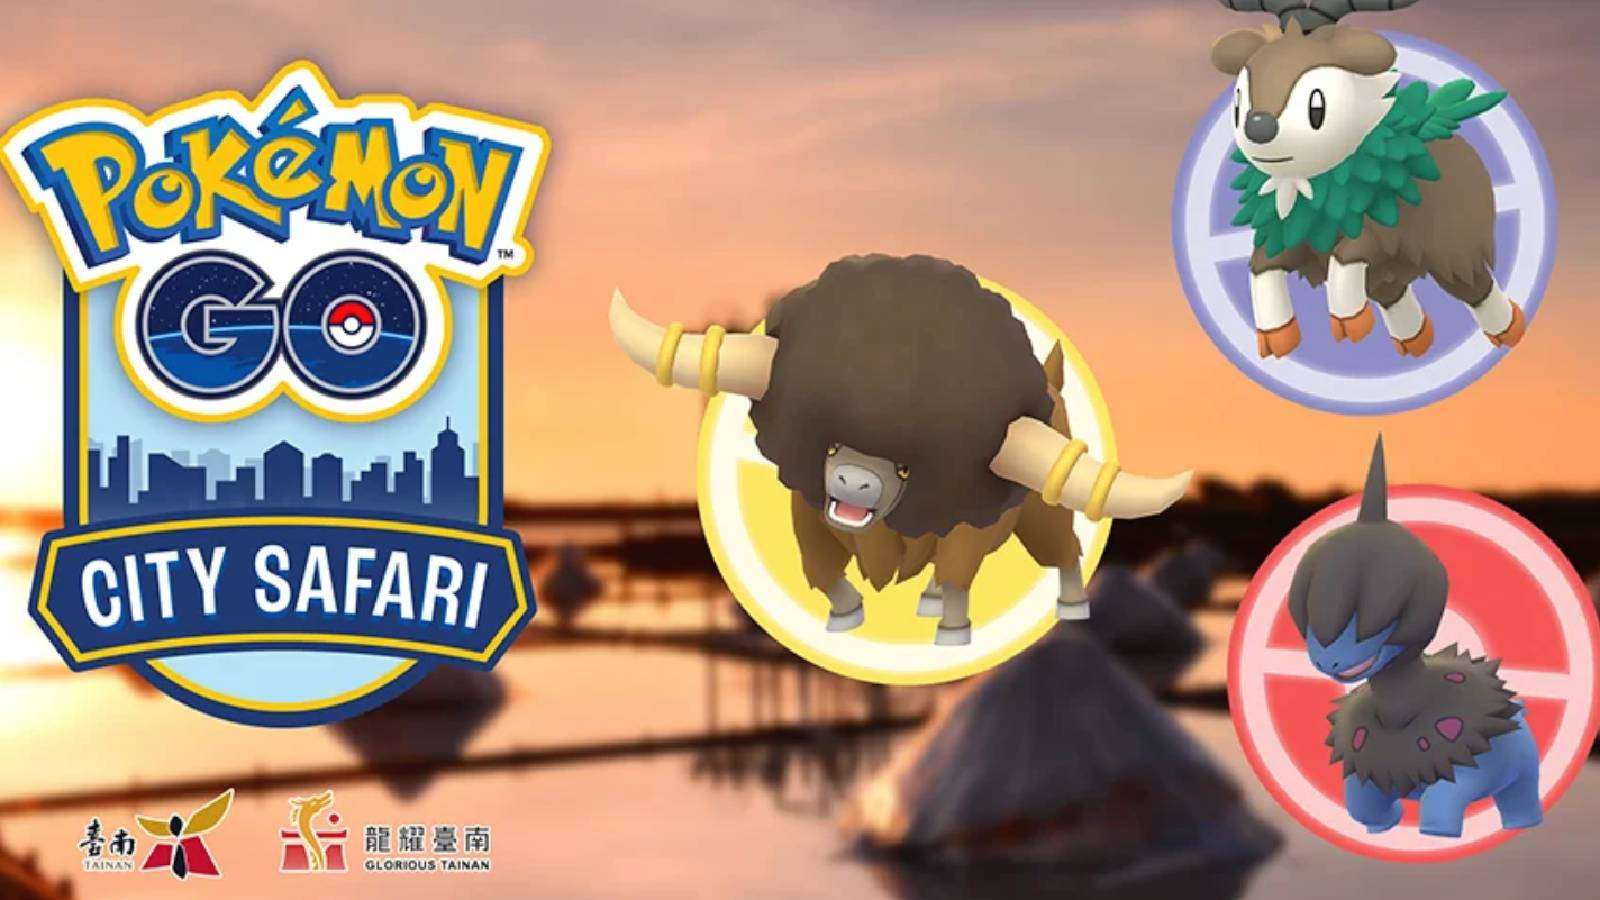 Promotional artwork for the Pokemon Go City Safari shows the Pokemon Skiddo, Deino, and Bouffalant, against a backdrop of Tainan, Taiwan